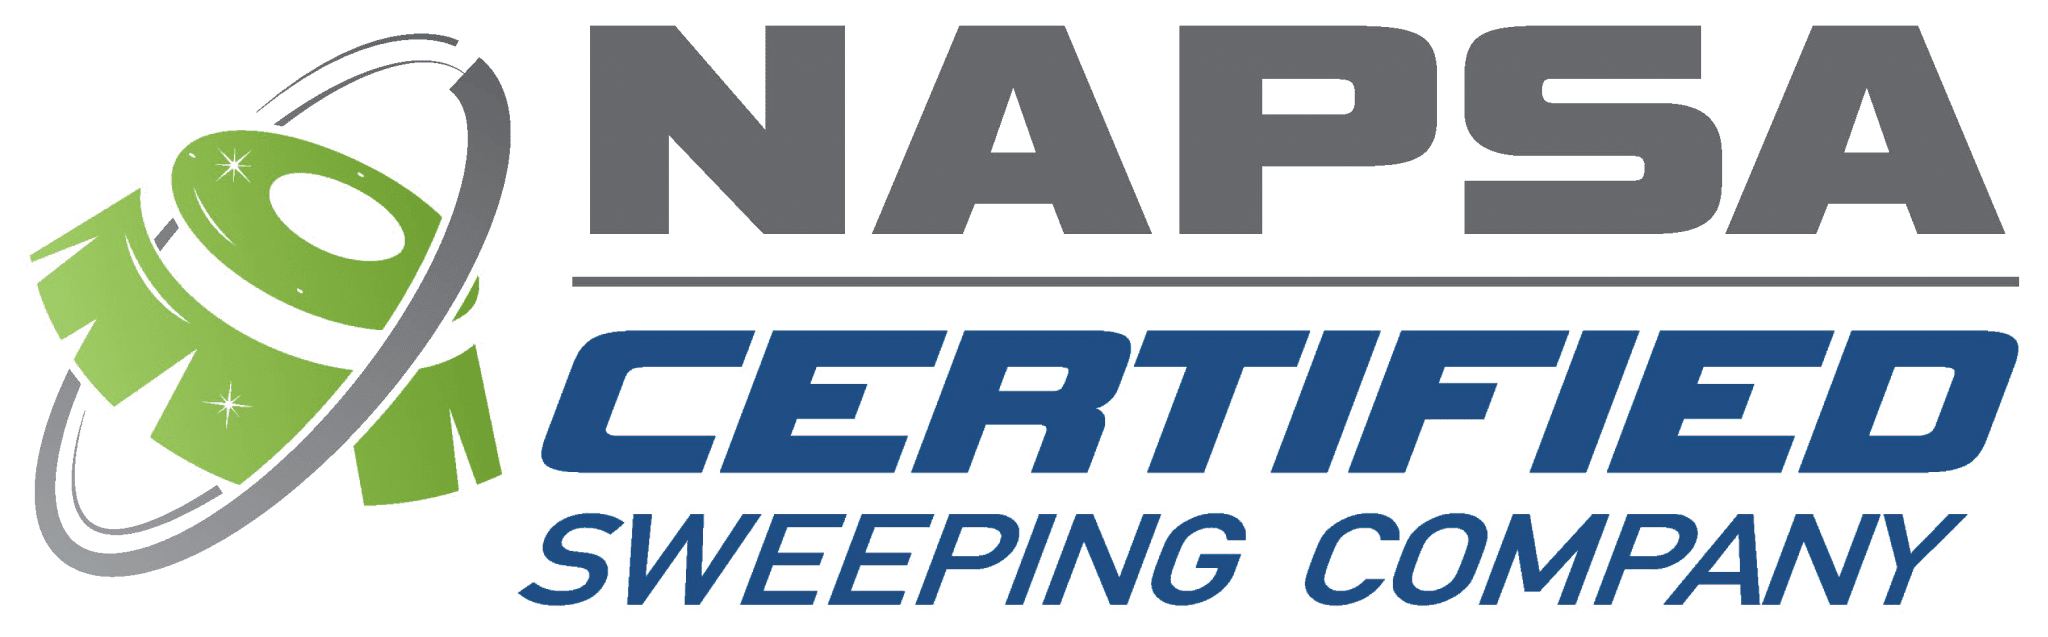 Lexington Kentucky's Official NAPSA Certified Sweeping Company.